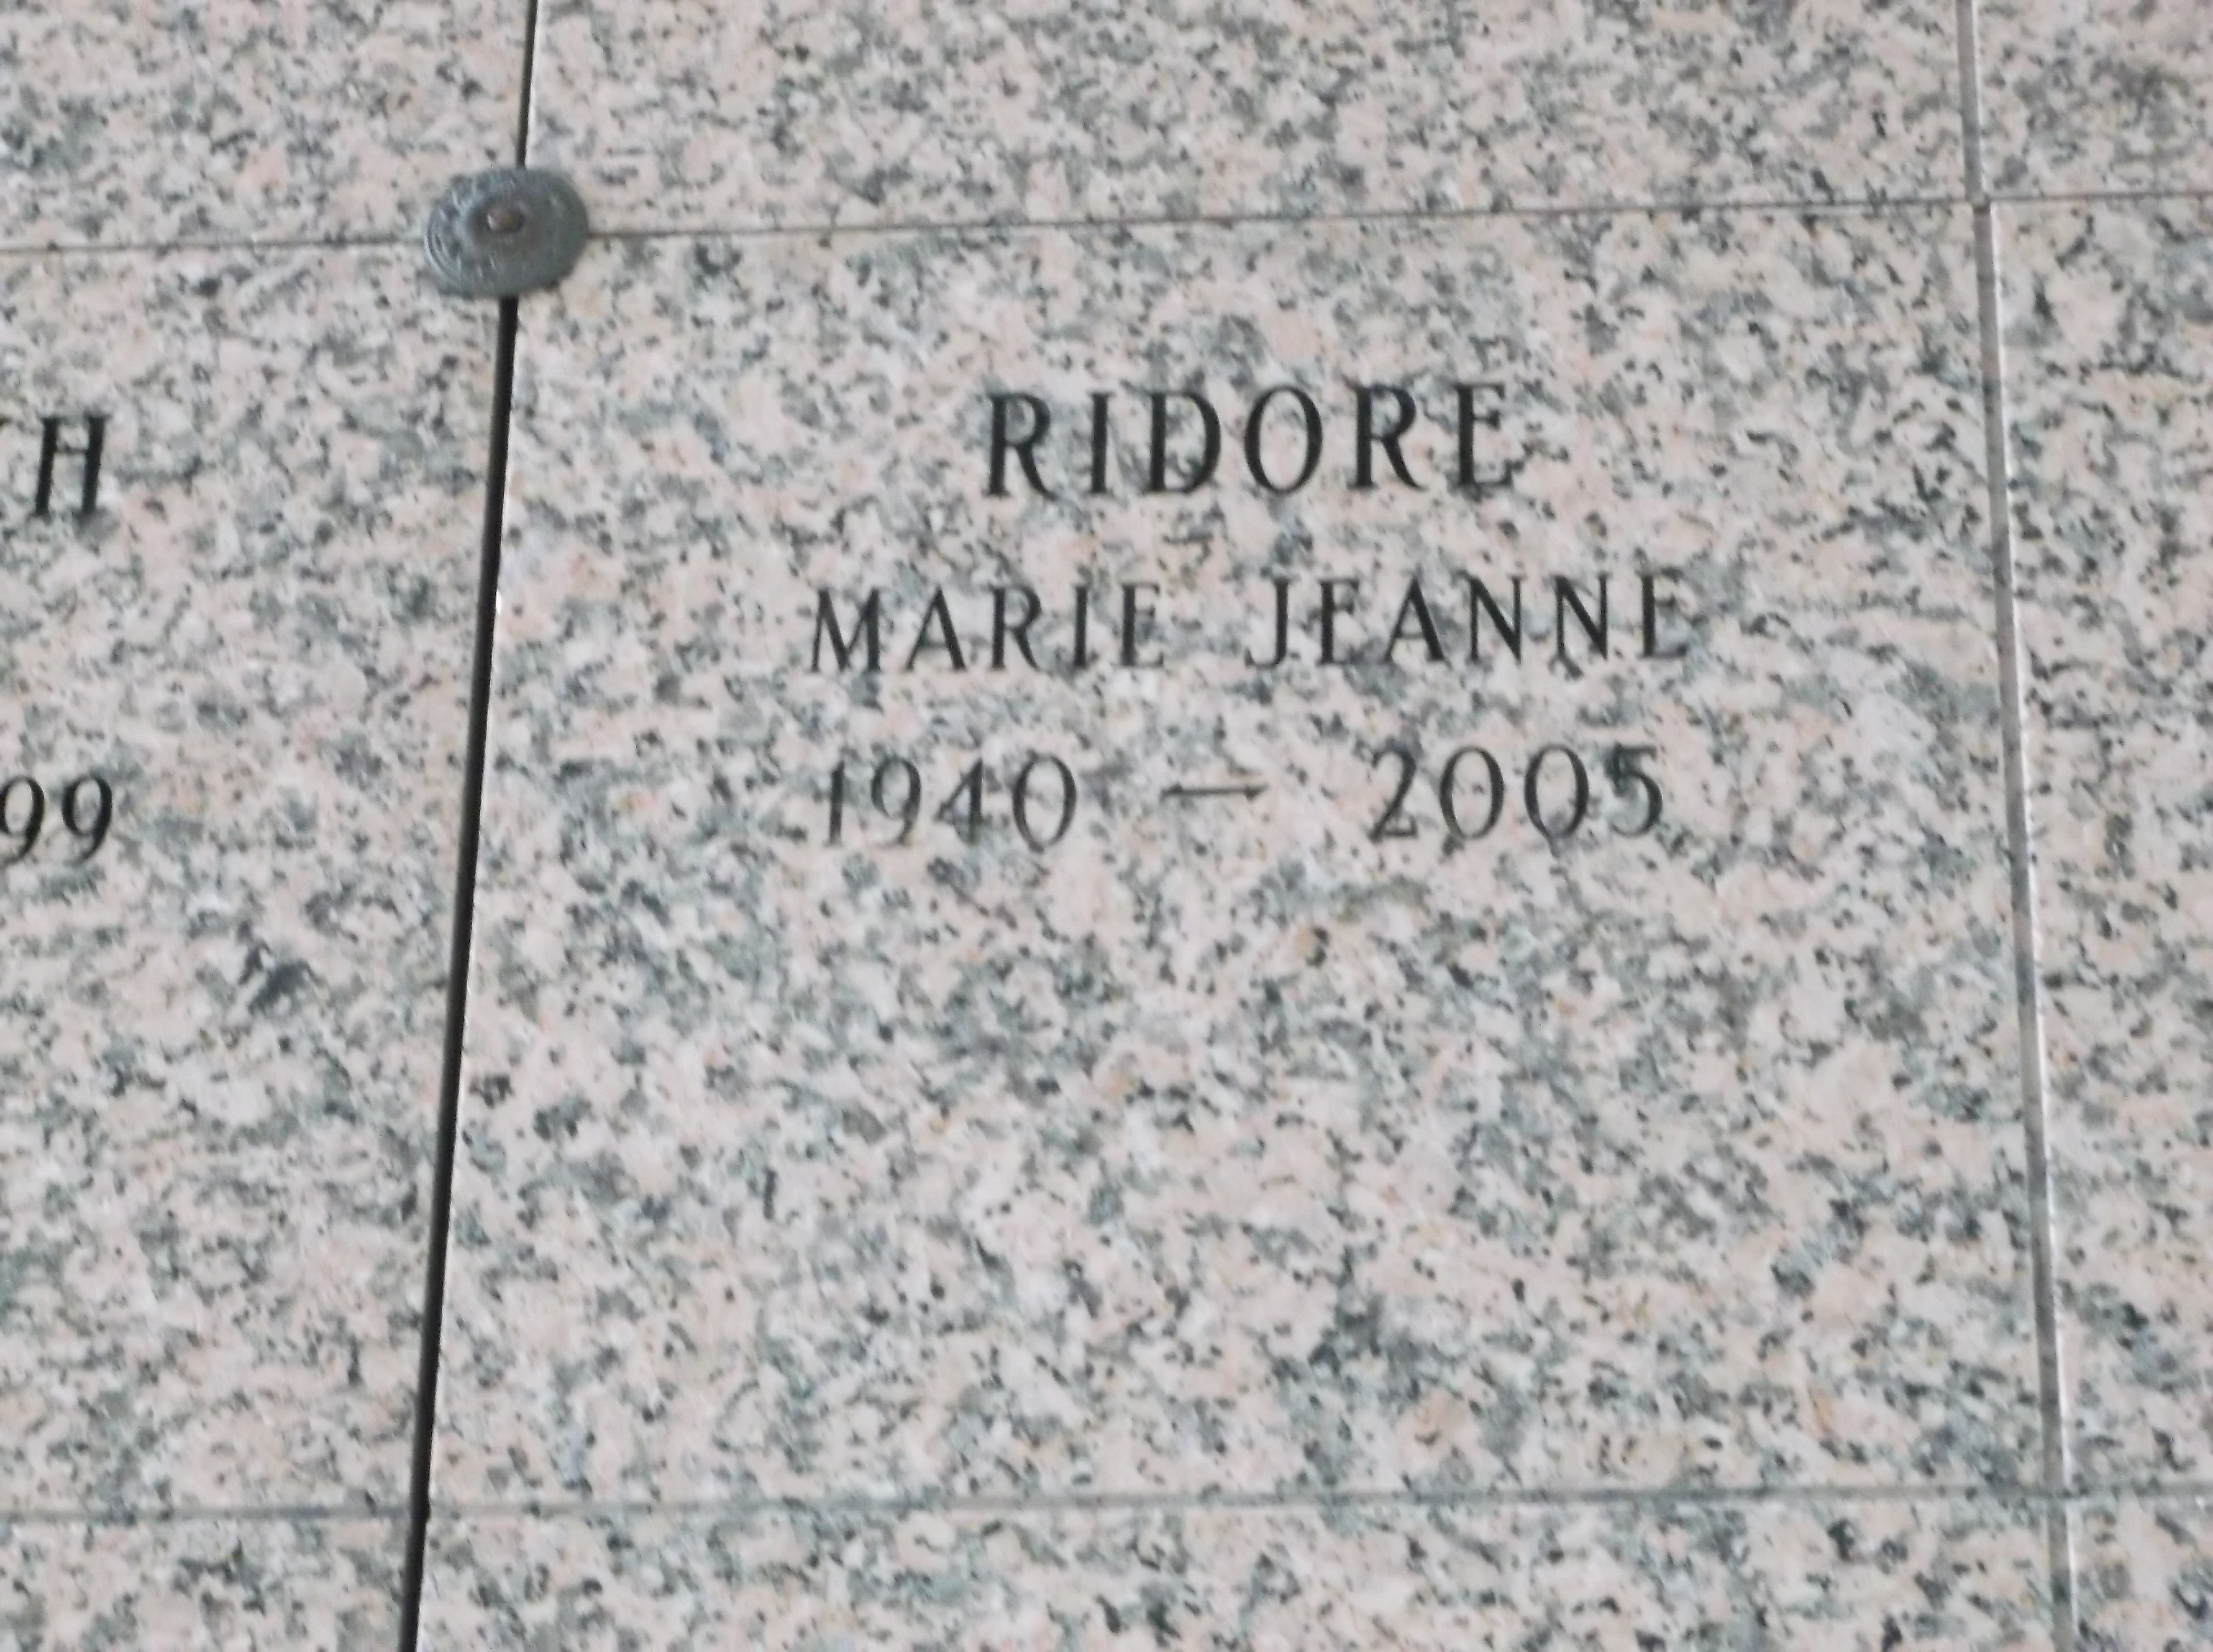 Marie Jeanne Ridore